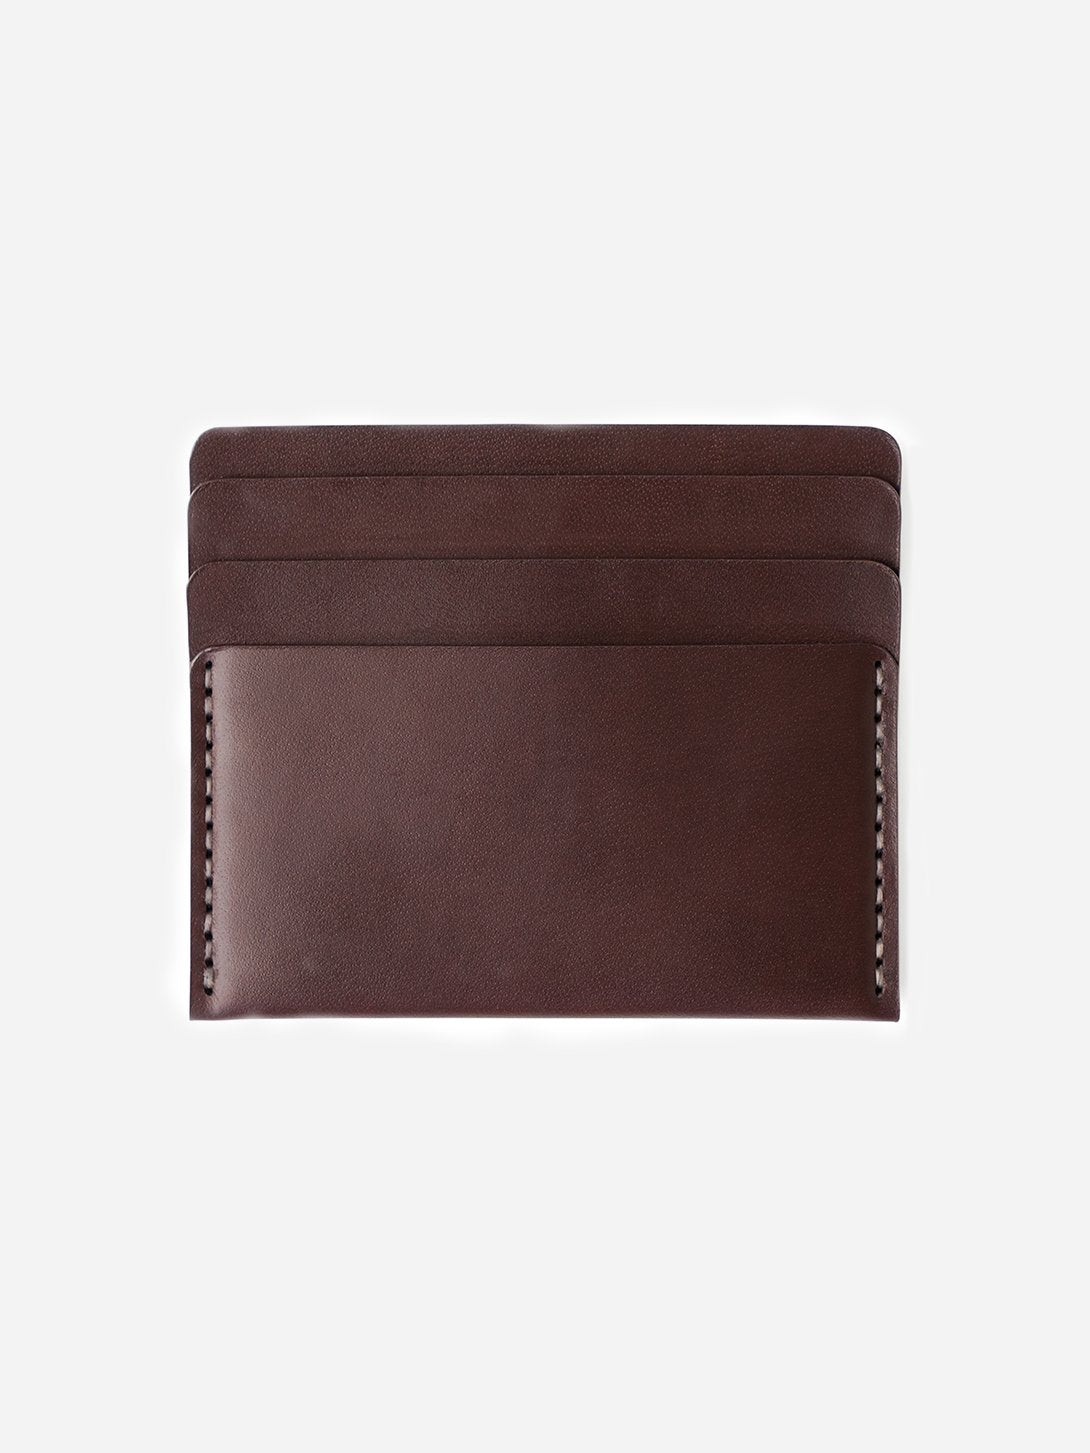 OX BLOOD mens card holder brown leather wallet cascade wallet makr